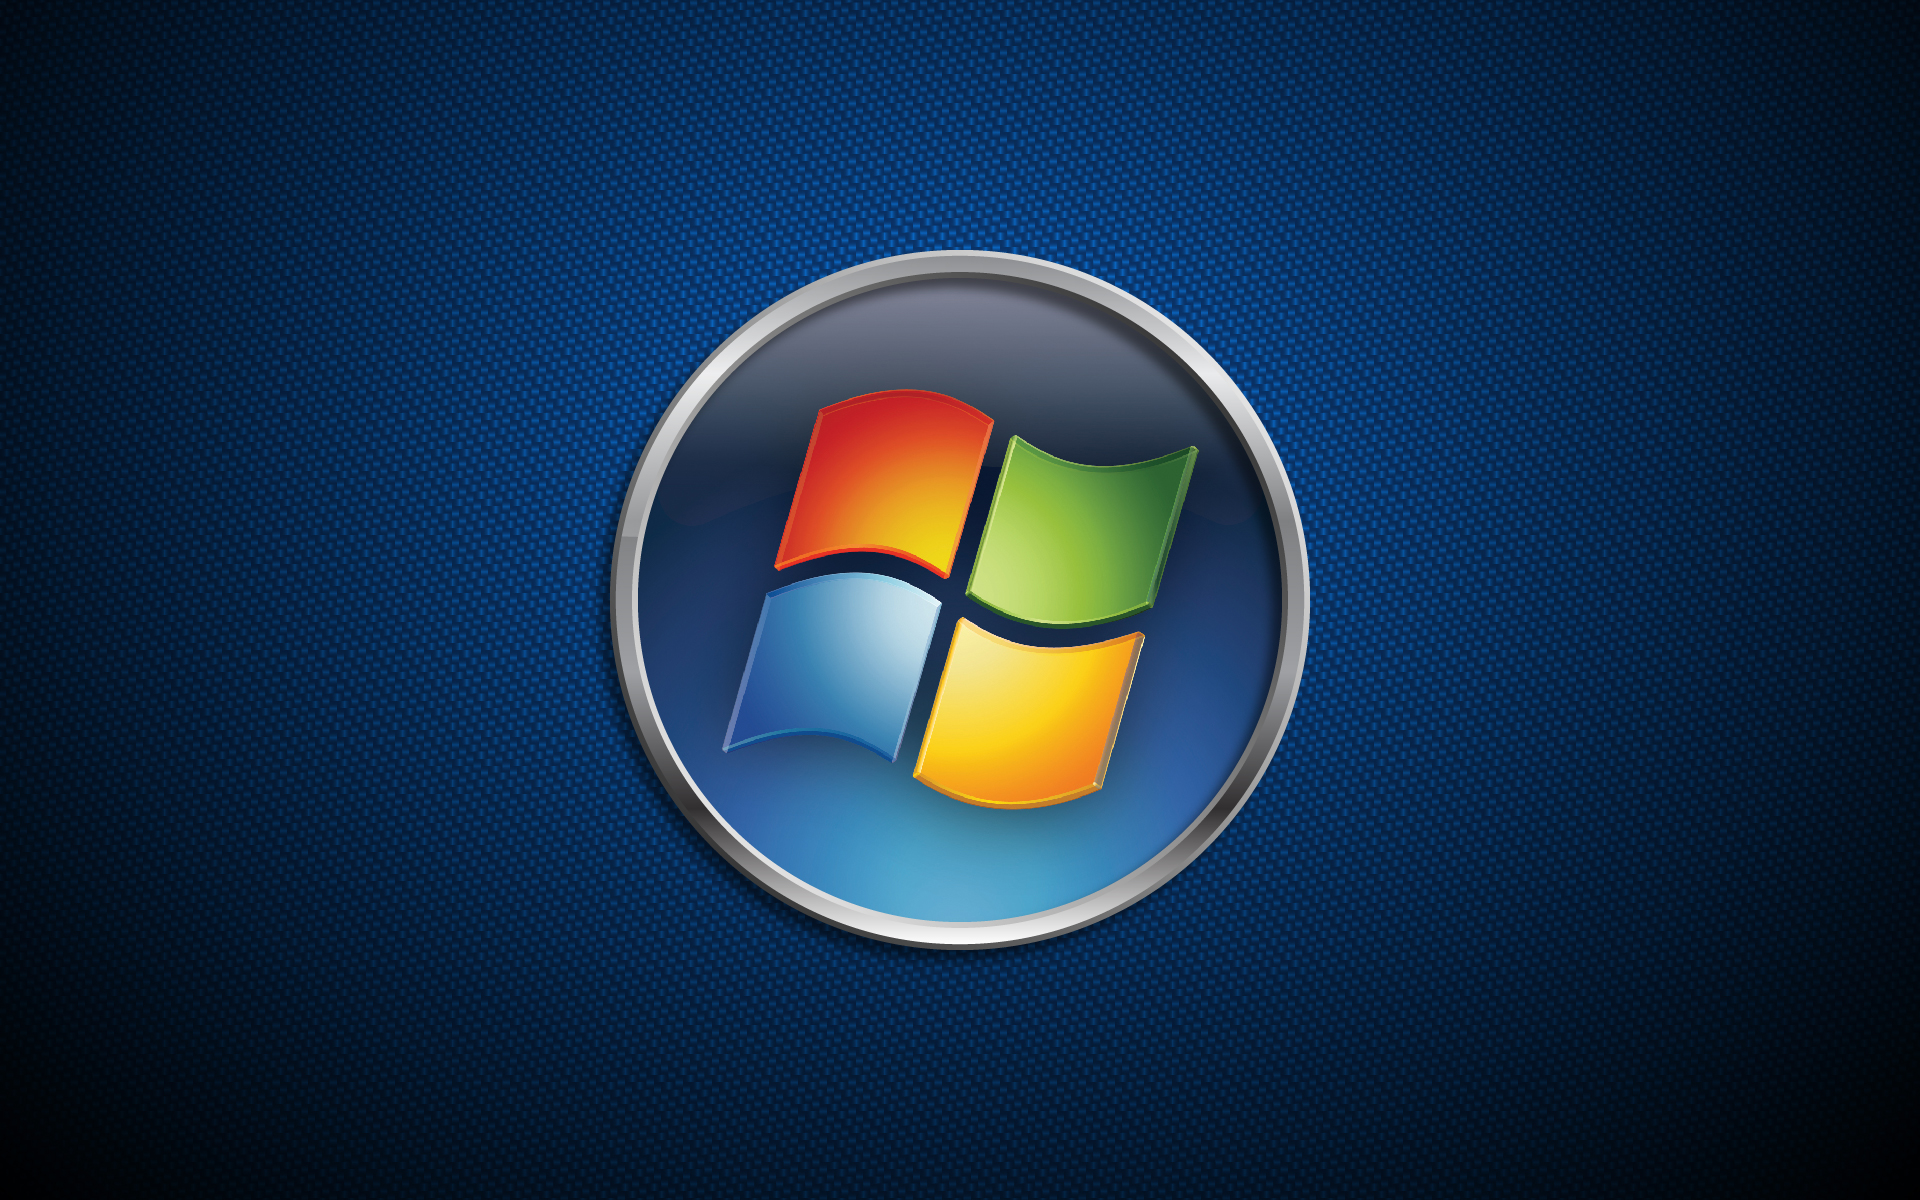 Microsoft windows operating system exe. ОС виндовс лого. Операционная система Windows. Логотип вин. Значок виндоуса.